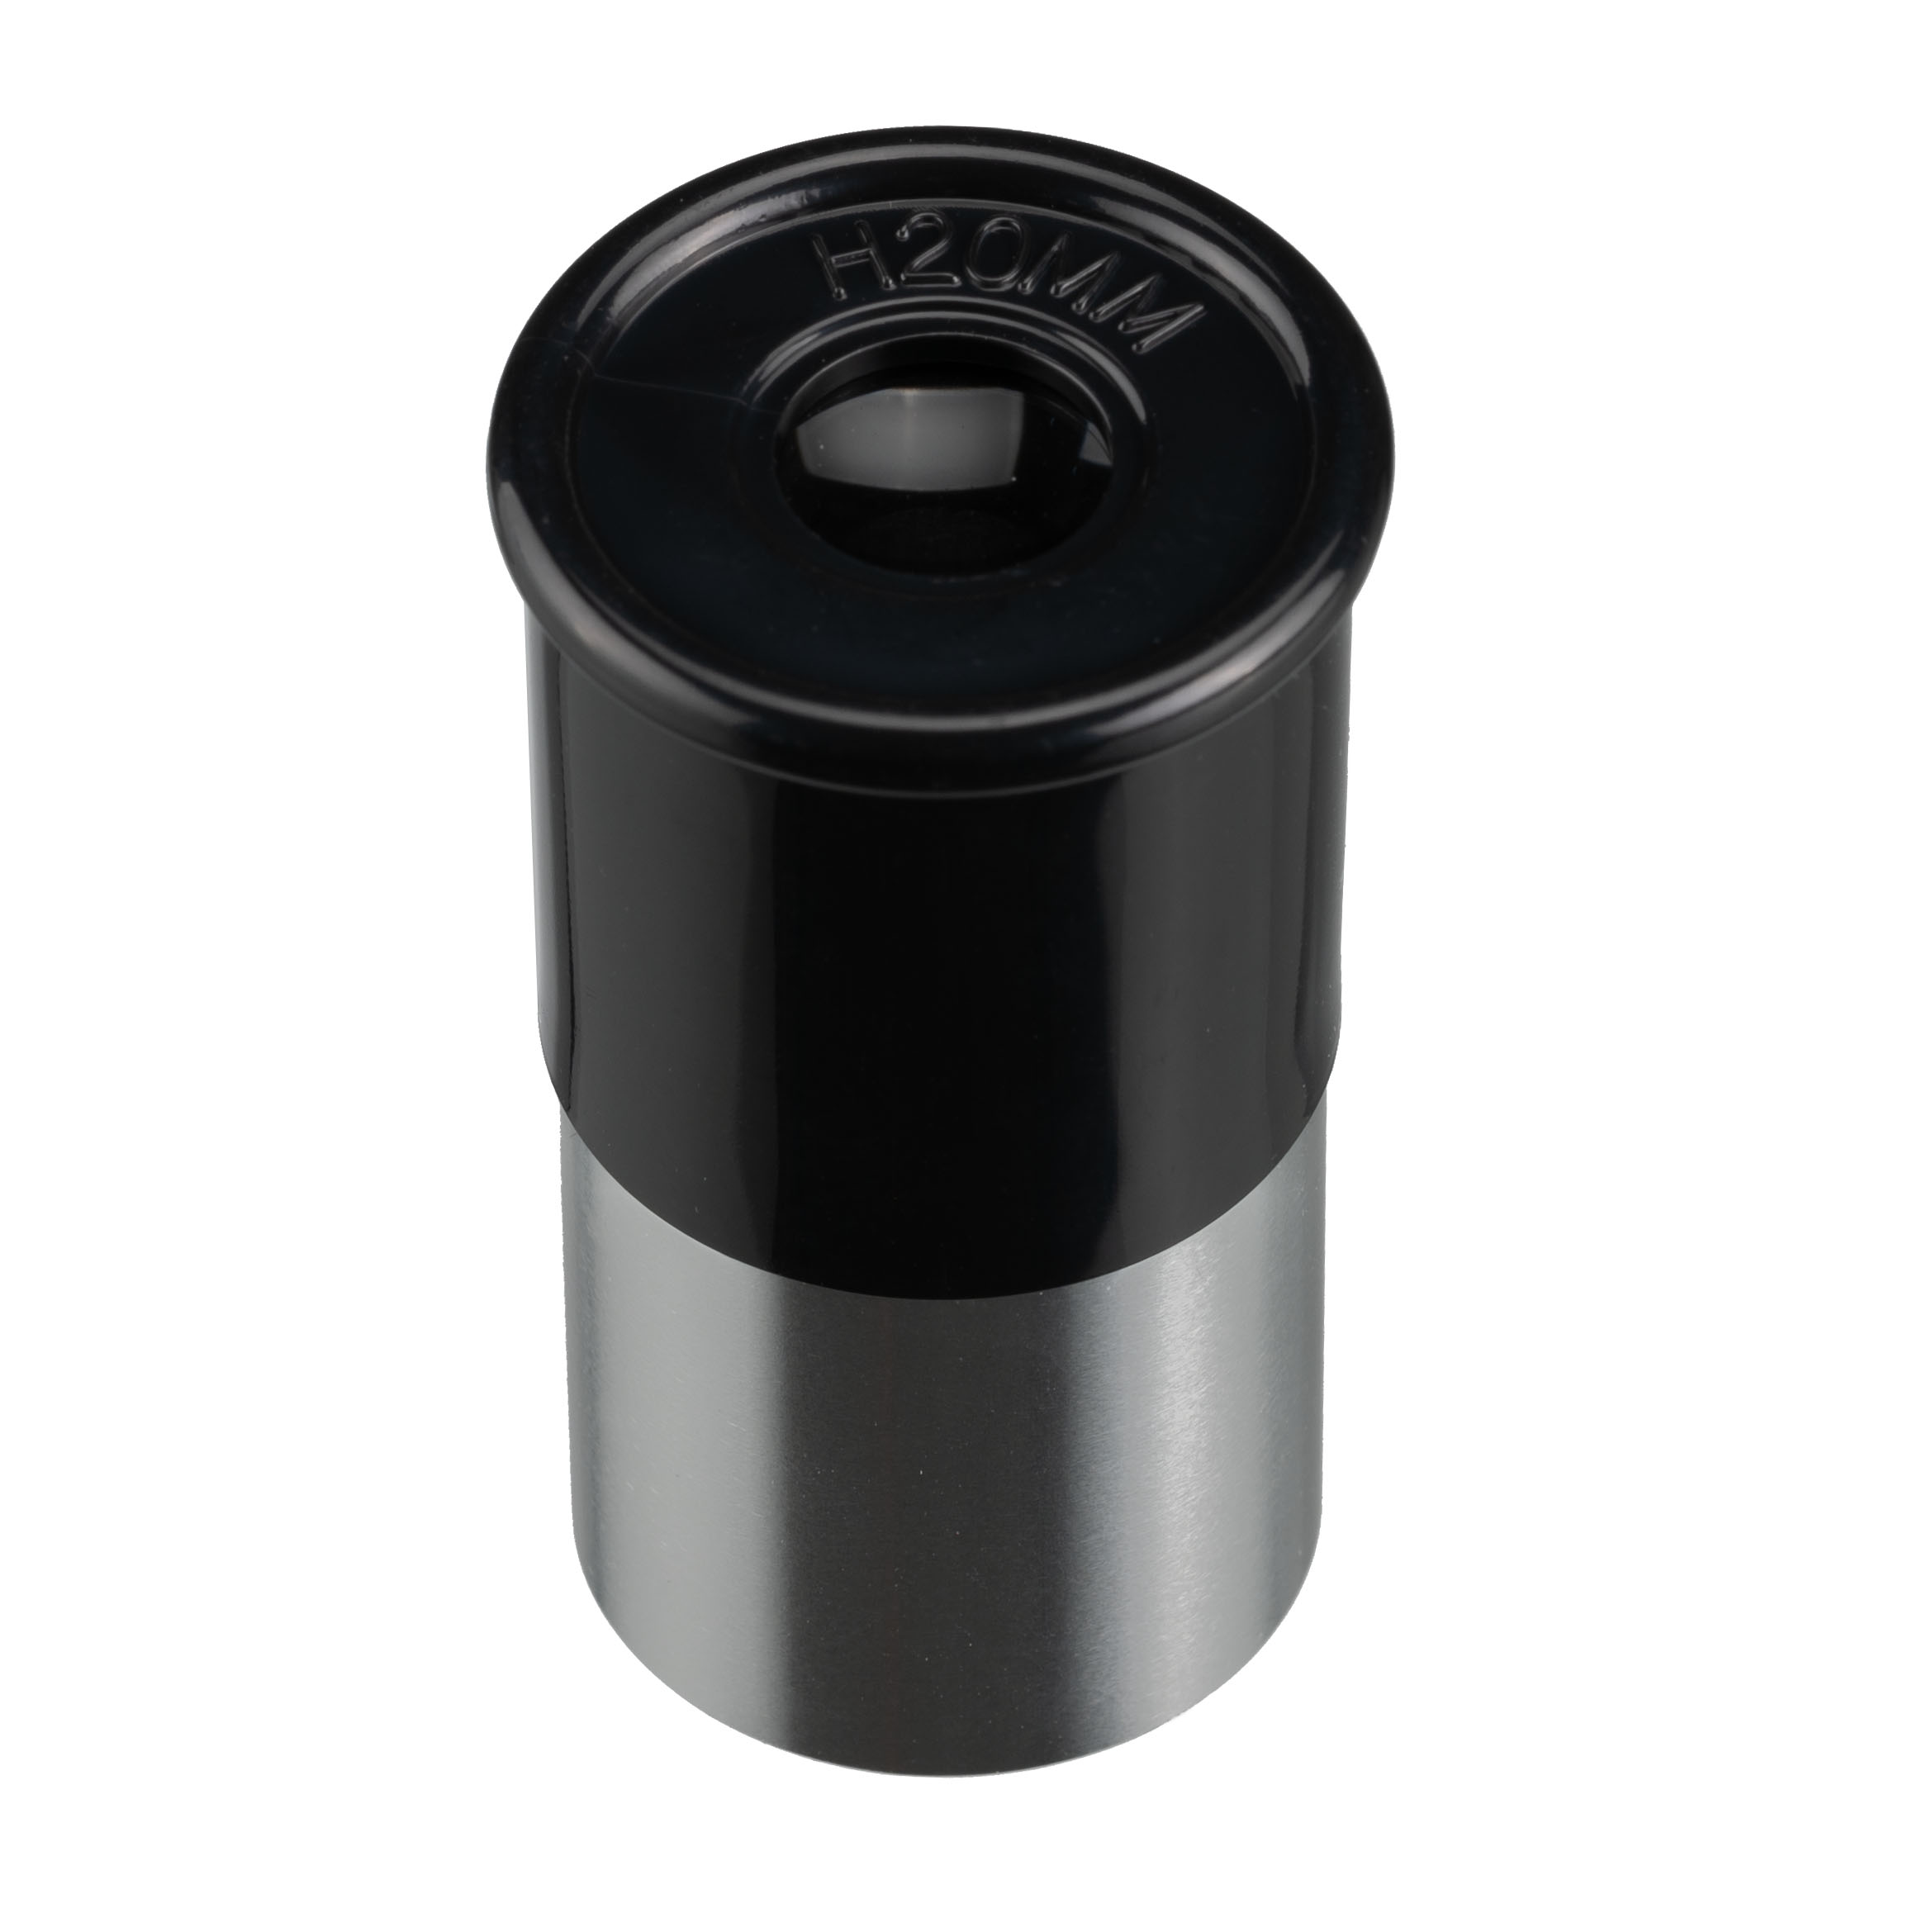 BRESSER Eyepiece 20mm 1.0"/24.5mm Barrel Diameter